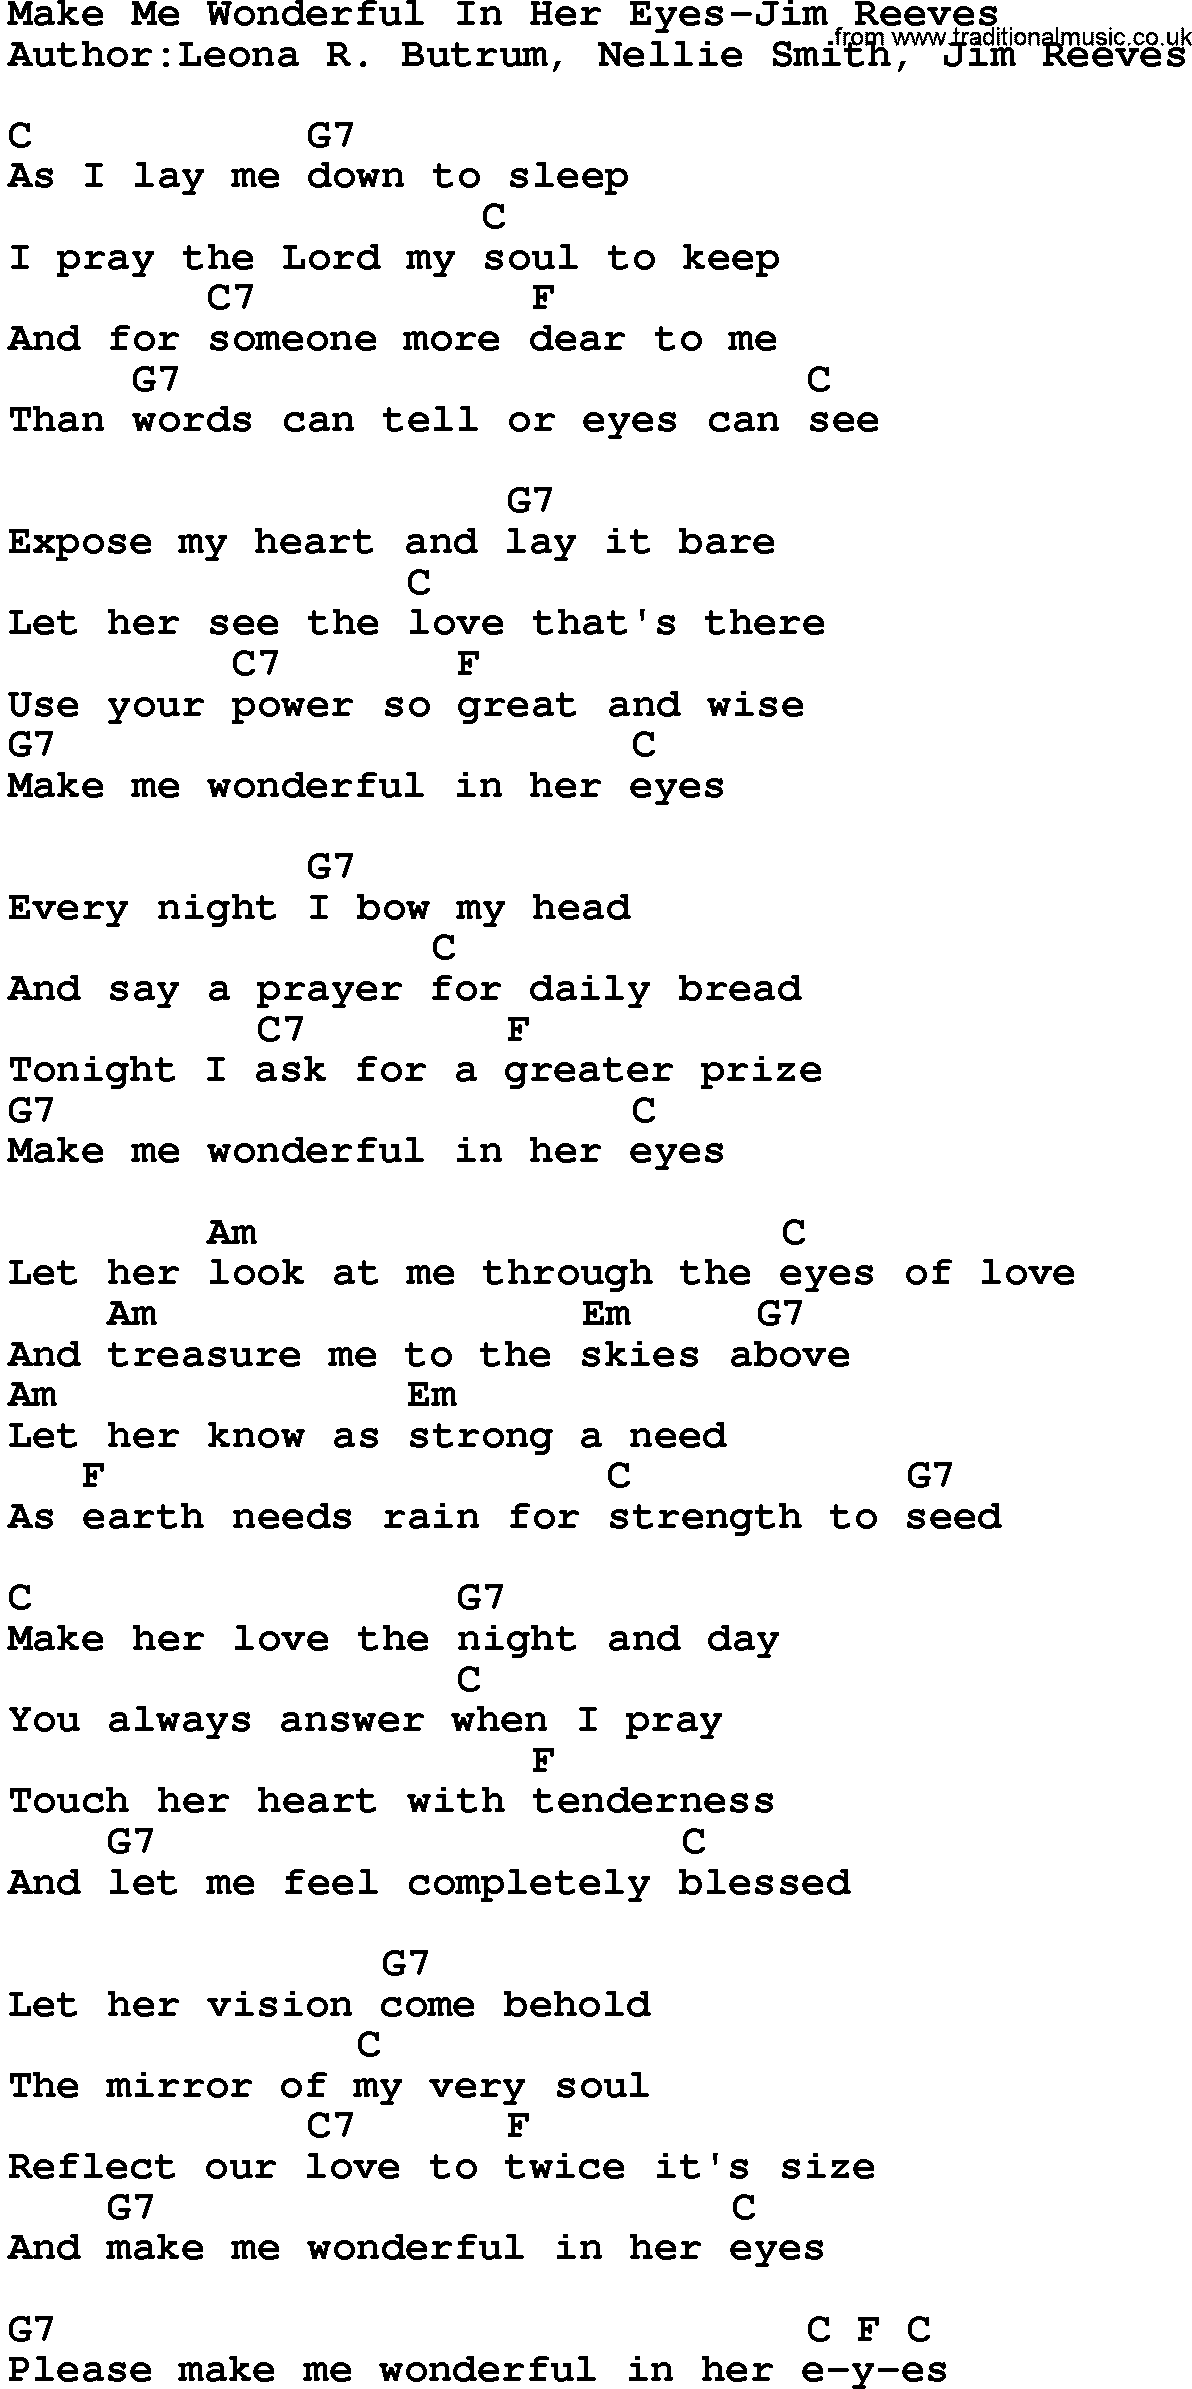 Country music song: Make Me Wonderful In Her Eyes-Jim Reeves lyrics and chords